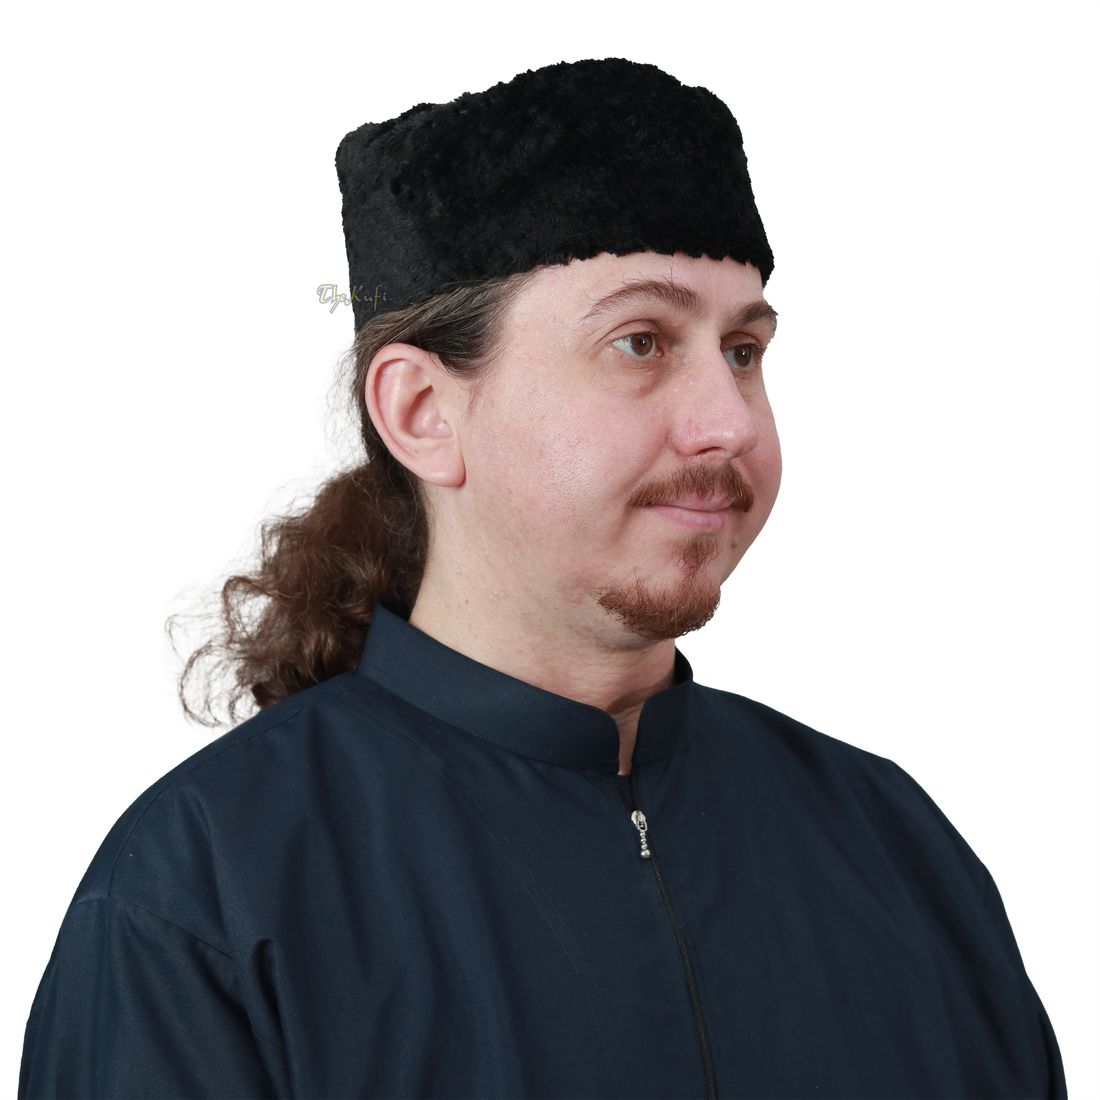 Black Winter Kufi Faux Fur Warm Chechen Uzbeki Style Islamic Hat Plush One-size Medium-large Stretchy 4-inch Tall Head Cover Muslim